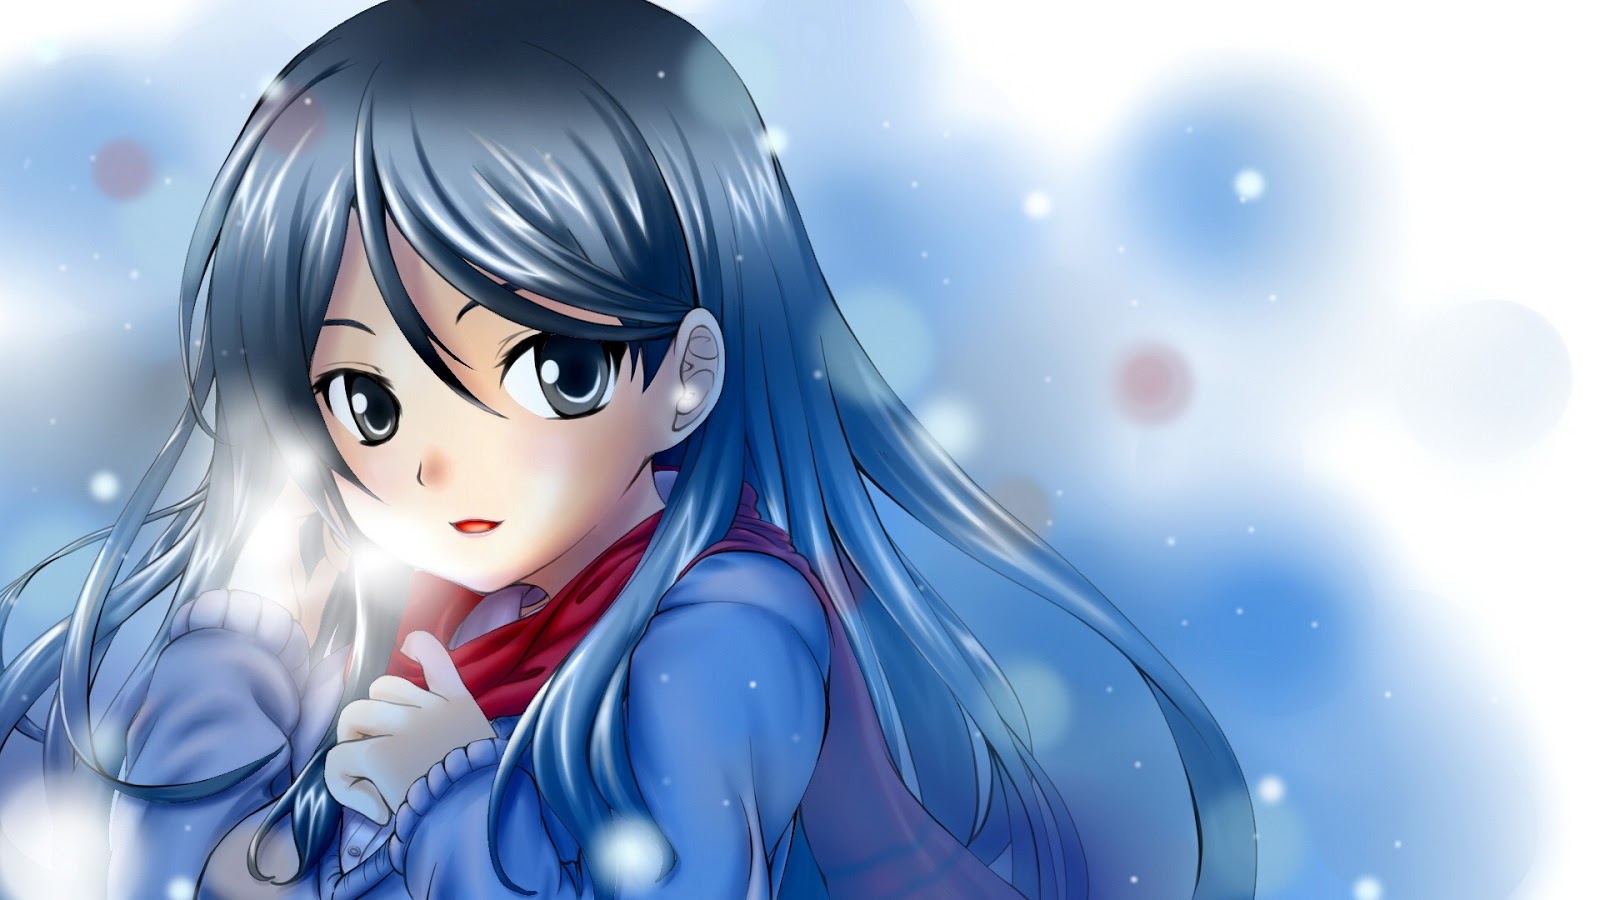 Download Kumpulan Wallpaper Anime HD Gratis Terbaru Keren Game